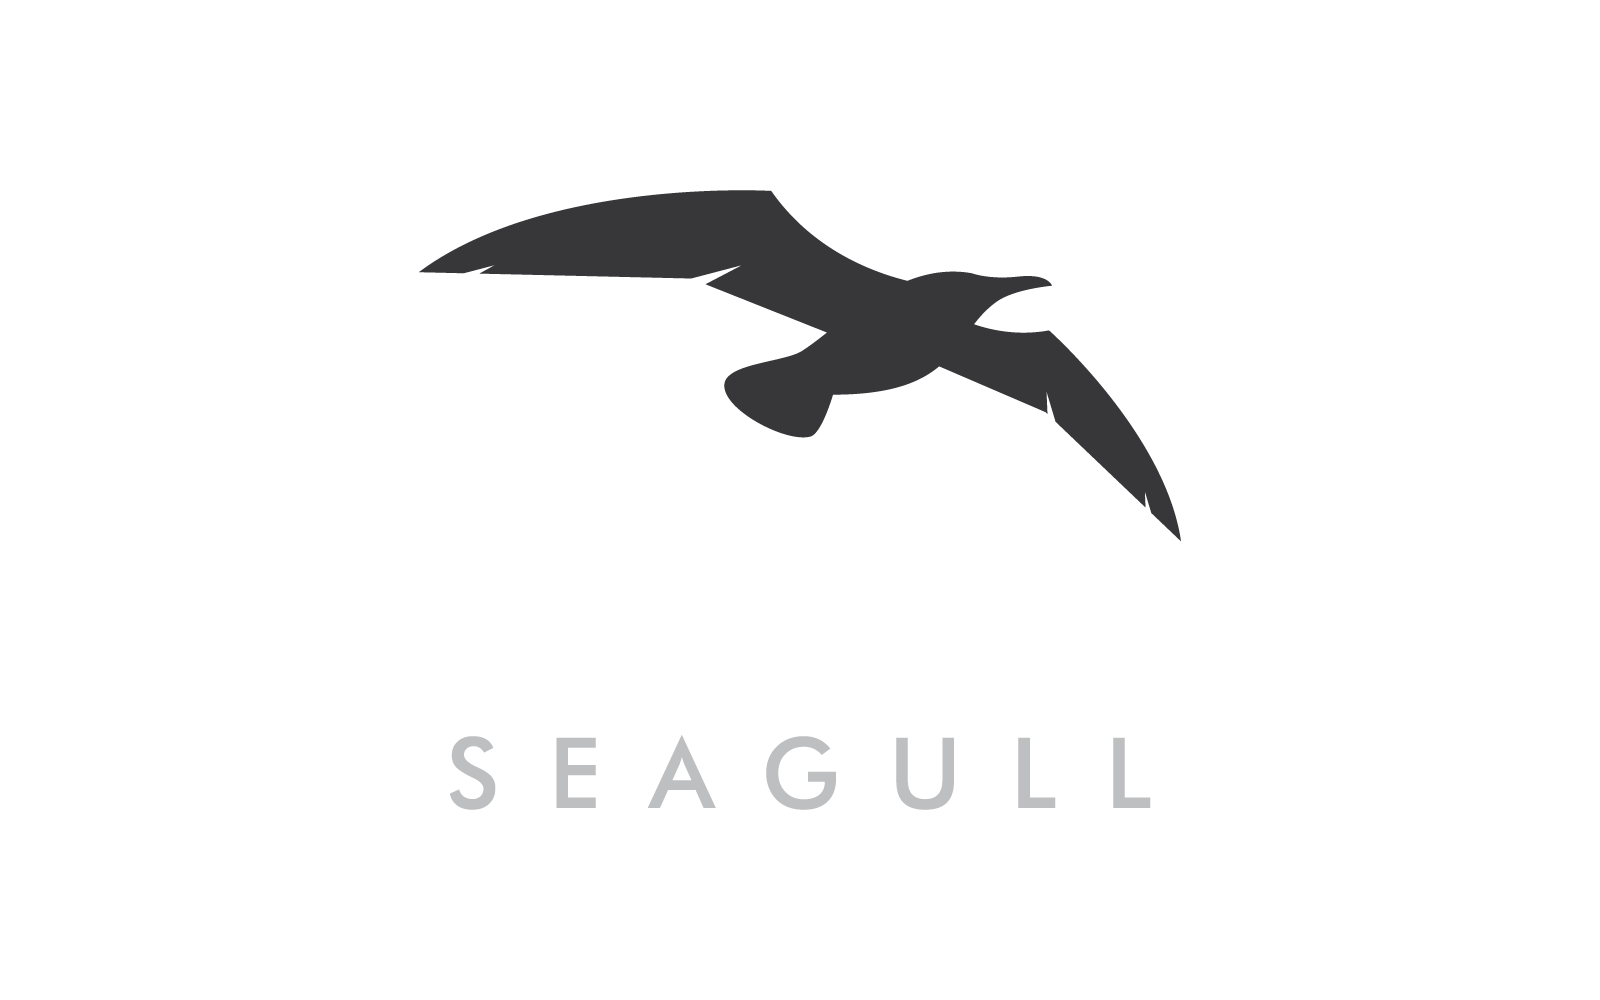 Seagull bird illustration logo vector design eps 10 Logo Template